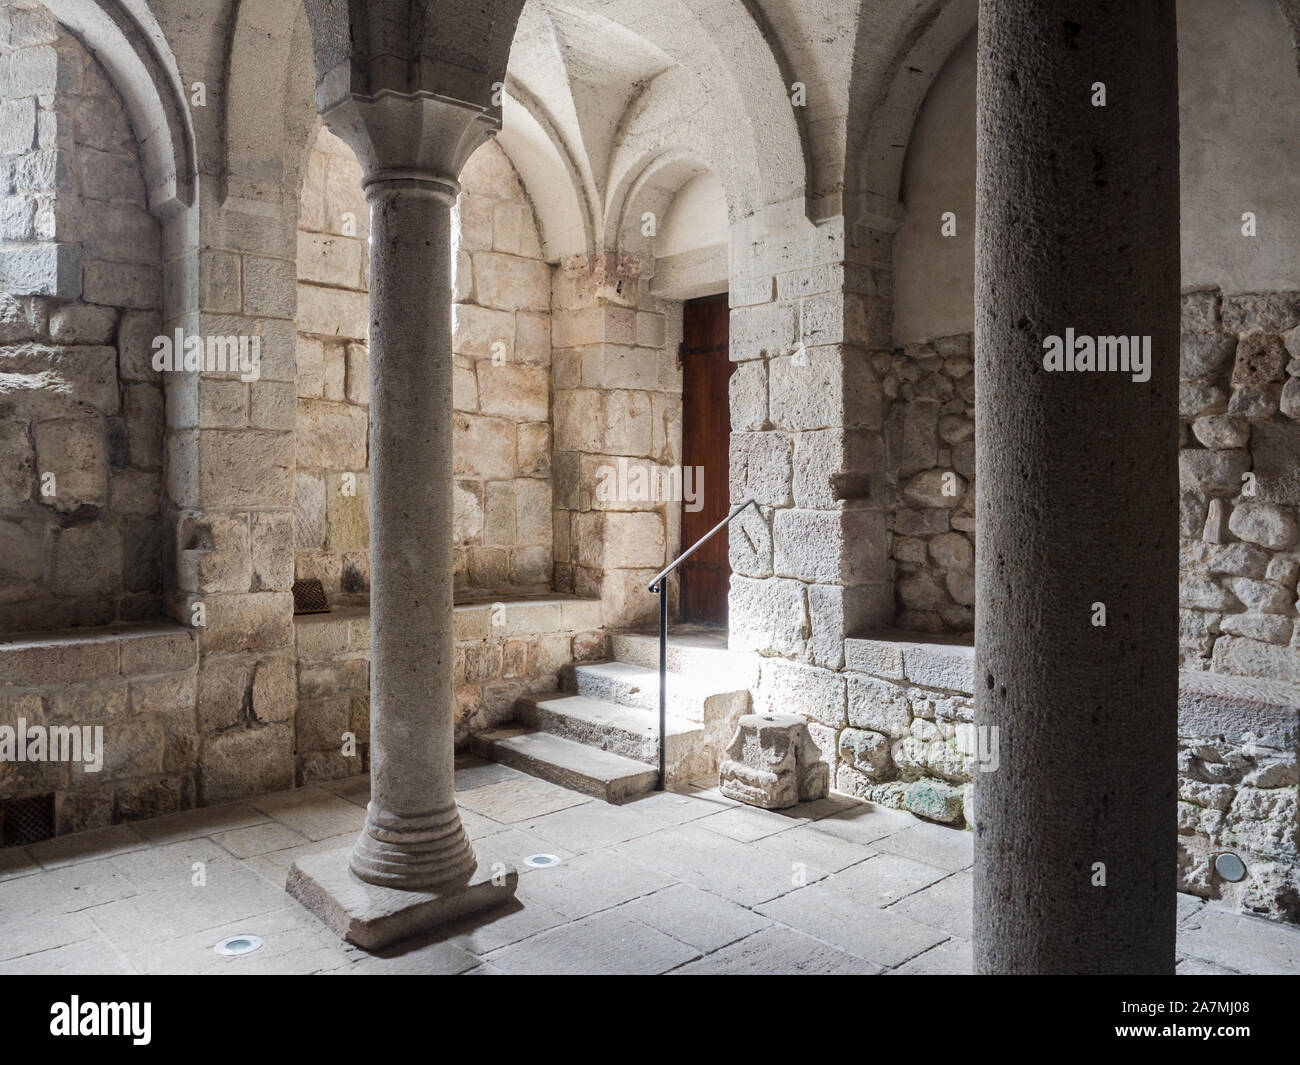 Abbadia San Salvatore, Italy -  April 24, 2019: Interior with pillars in a crypt. Stock Photo